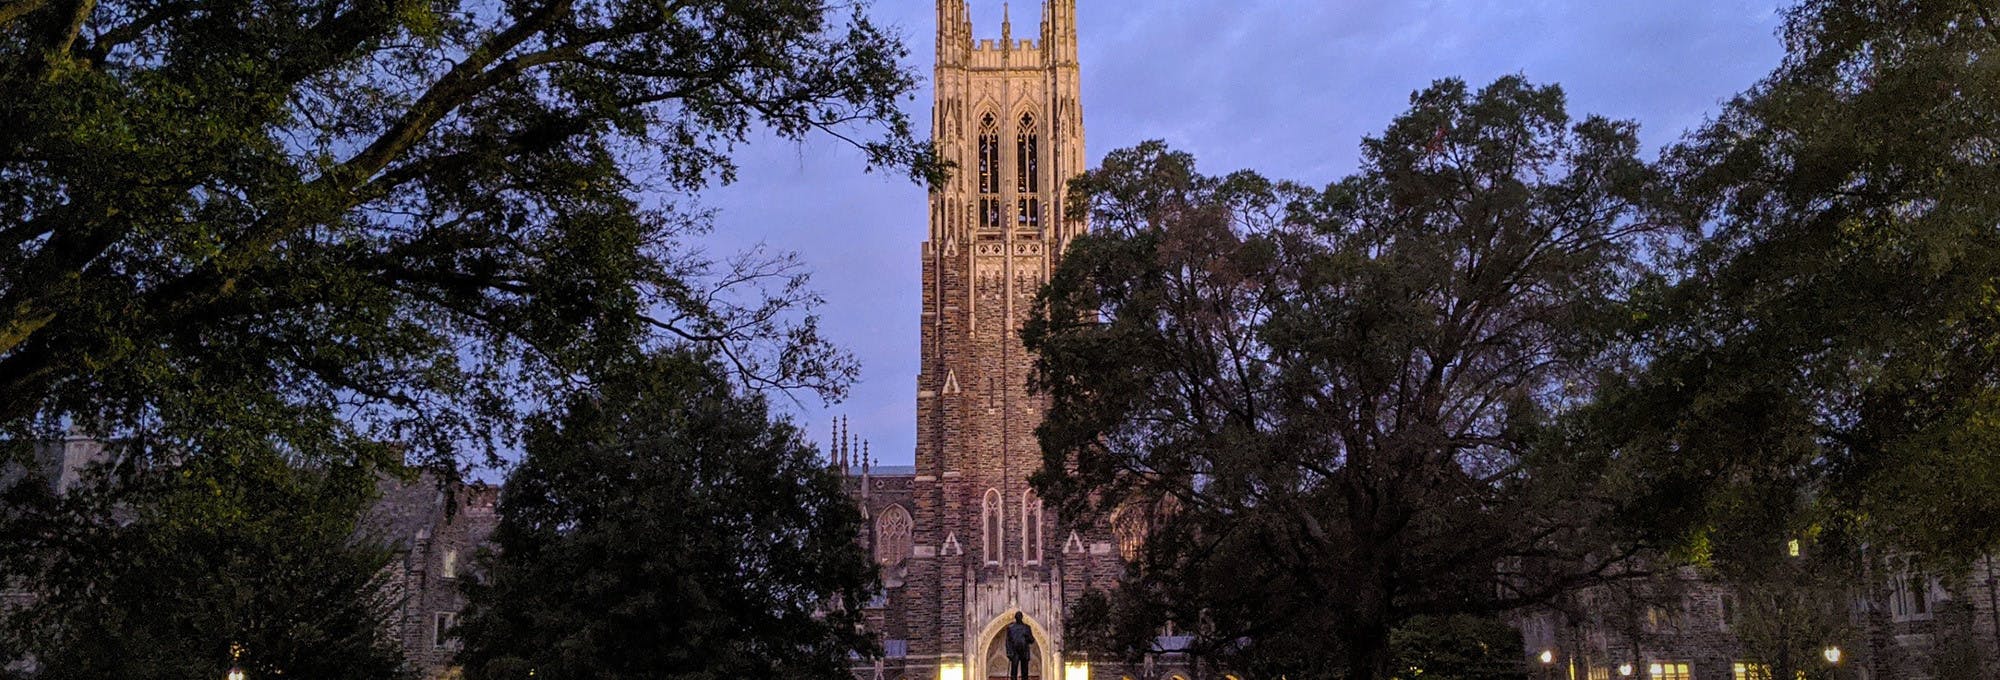 Front view of Duke University's chapel